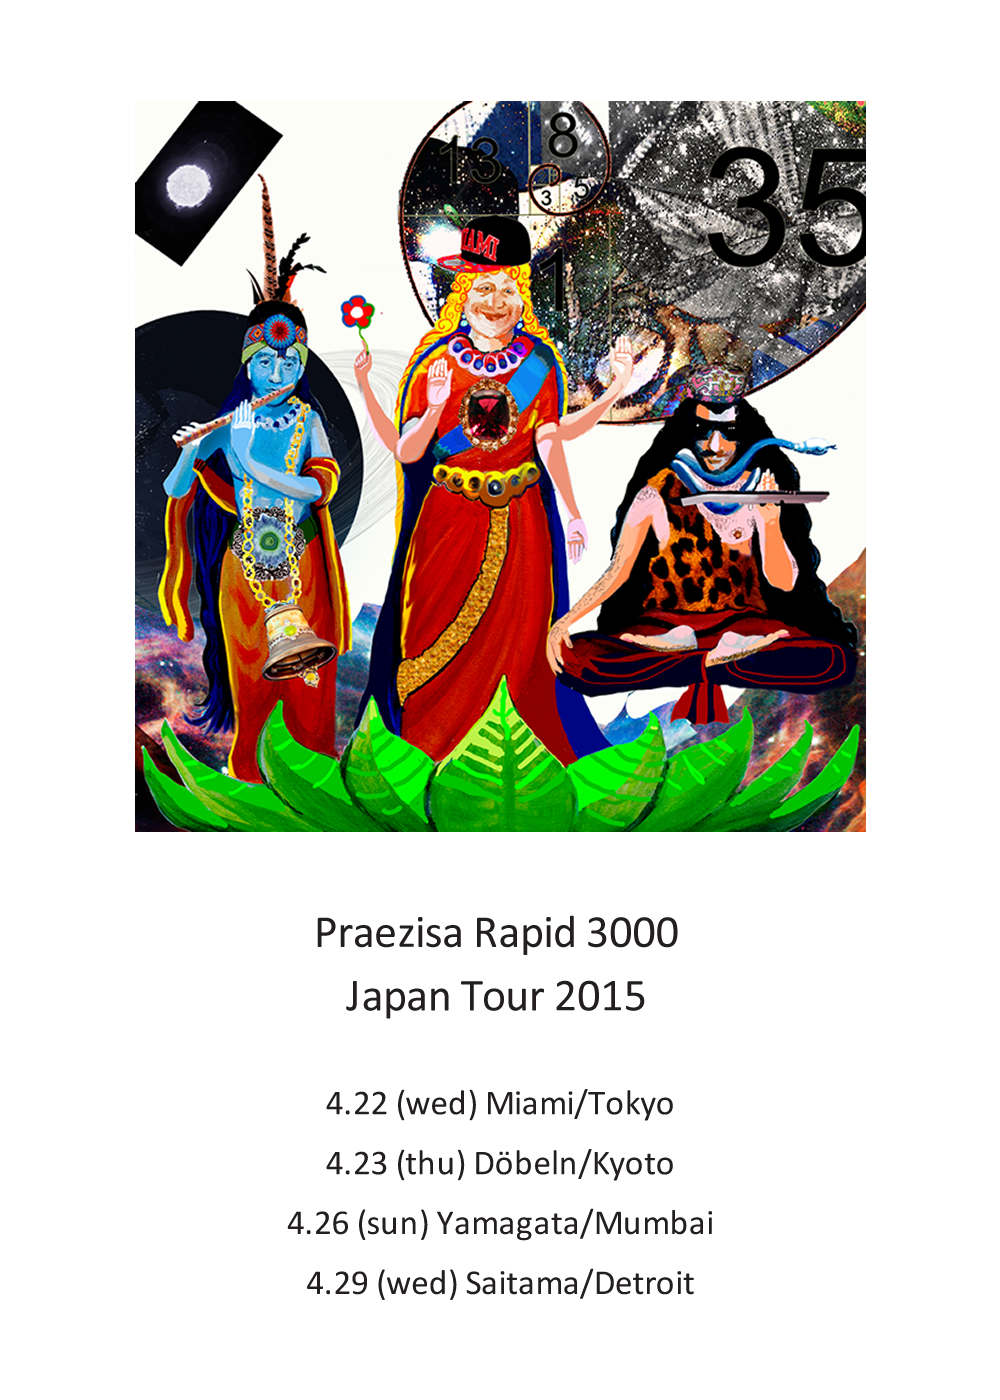 Praezisa Rapid 3000 - Japan Tour 2015 "Saitama/Detroit"